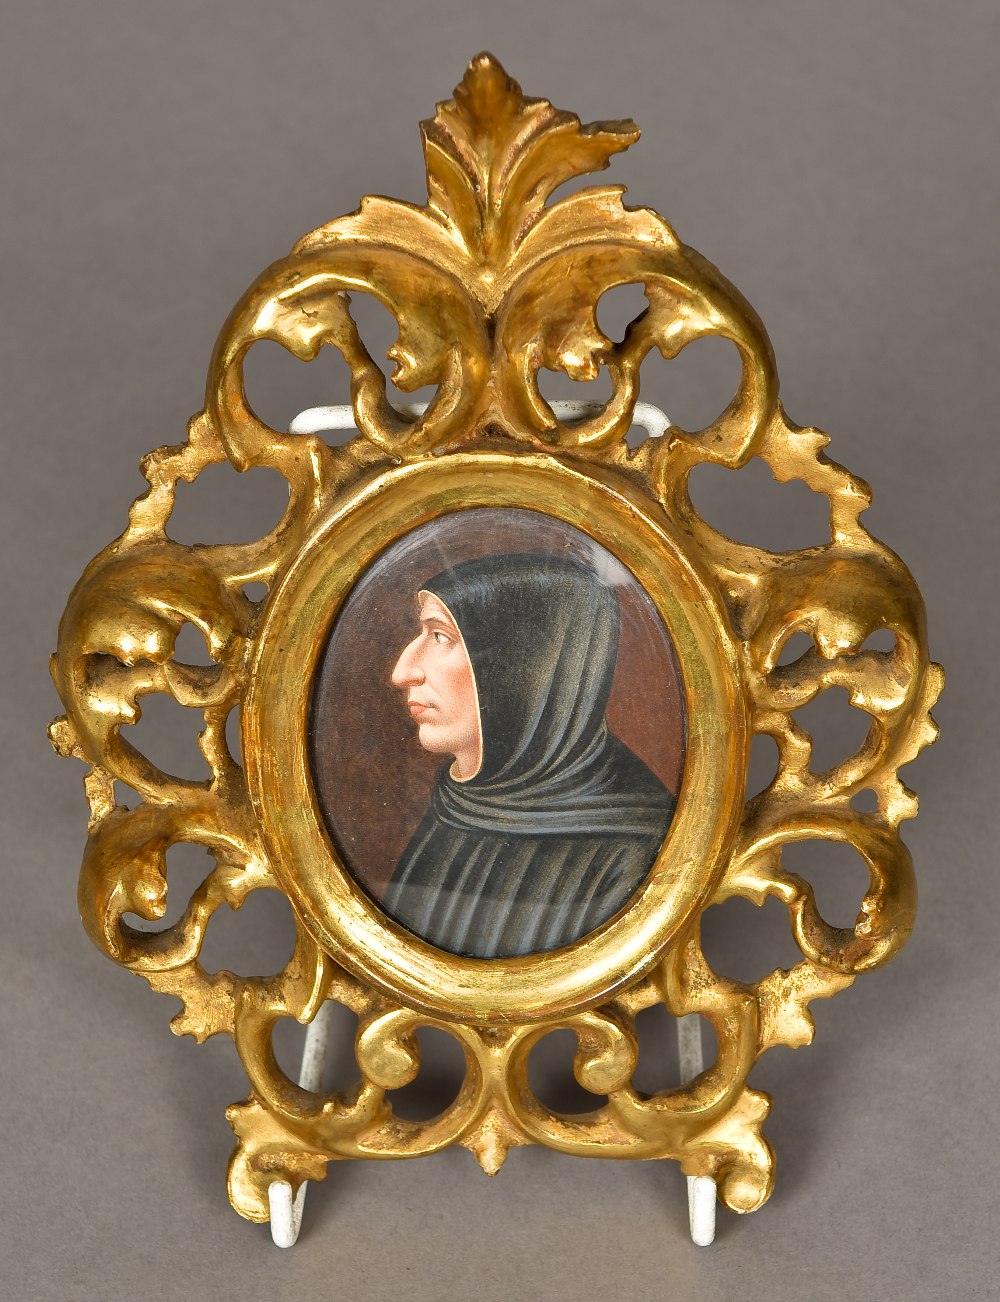 A 19th century miniature portrait of the Italian Dominican preacher Girolamo Savonarolla